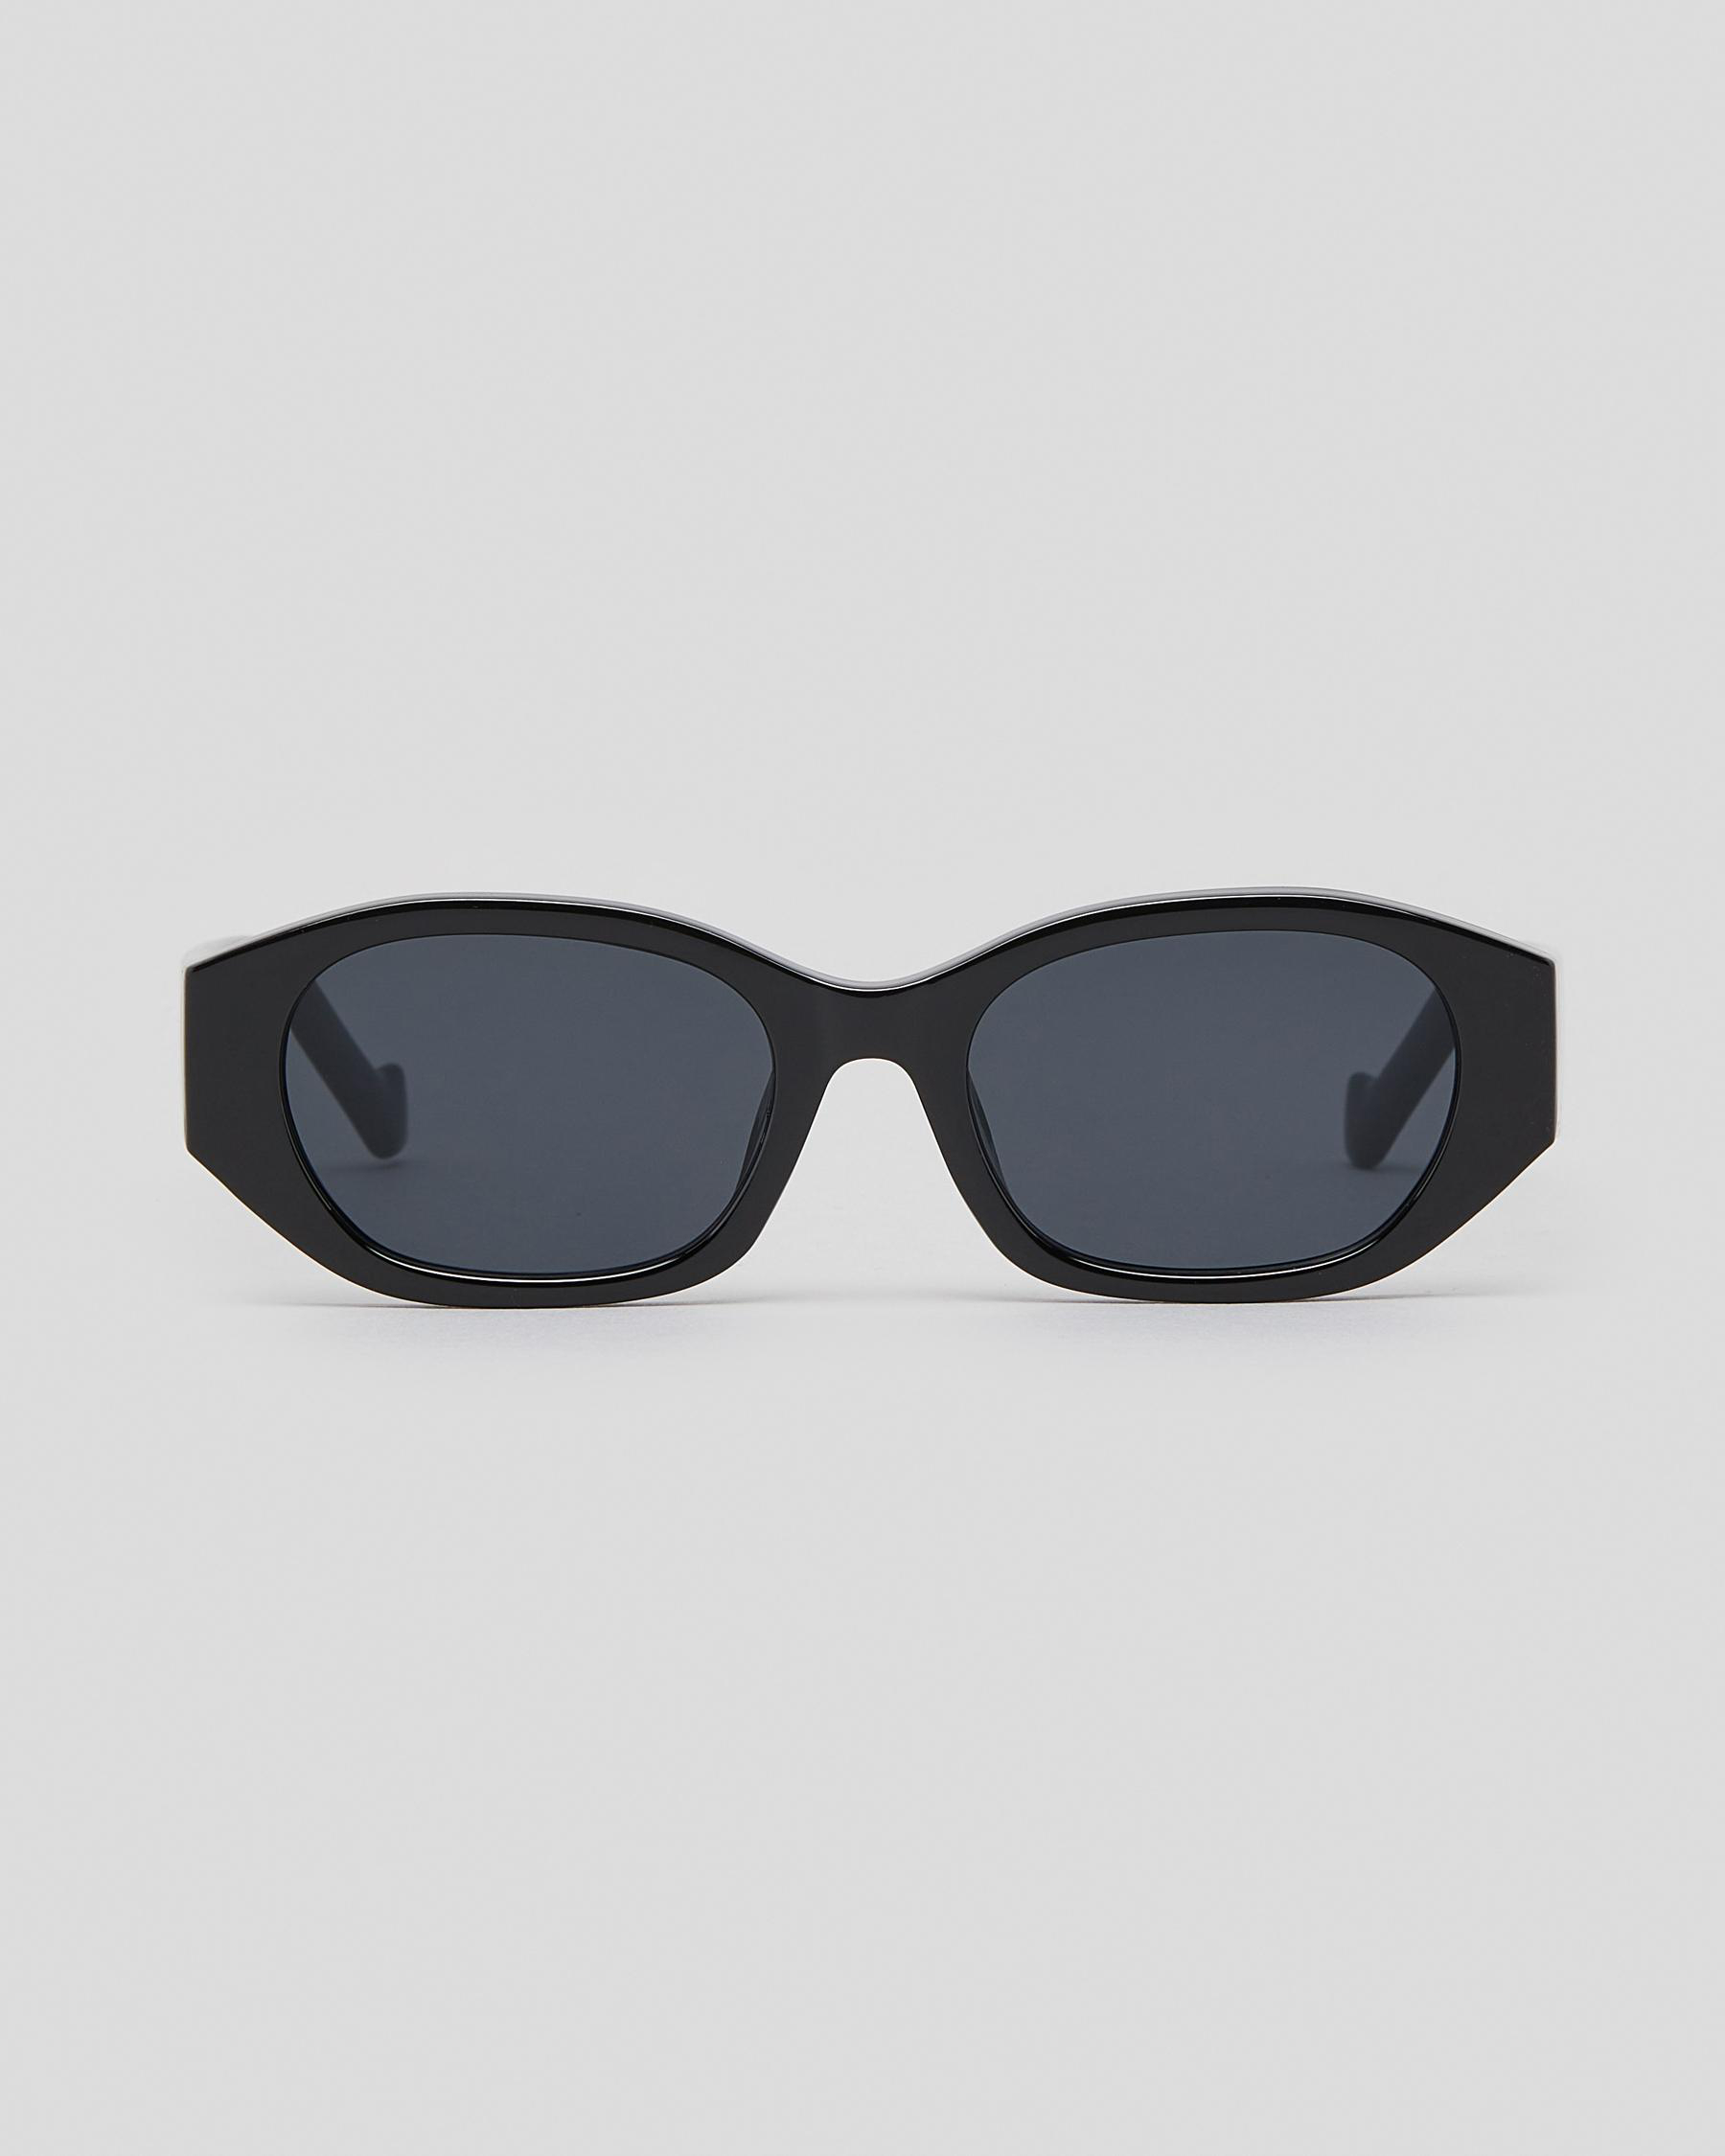 Indie Eyewear Evoke Sunglasses In Black - Fast Shipping & Easy Returns ...